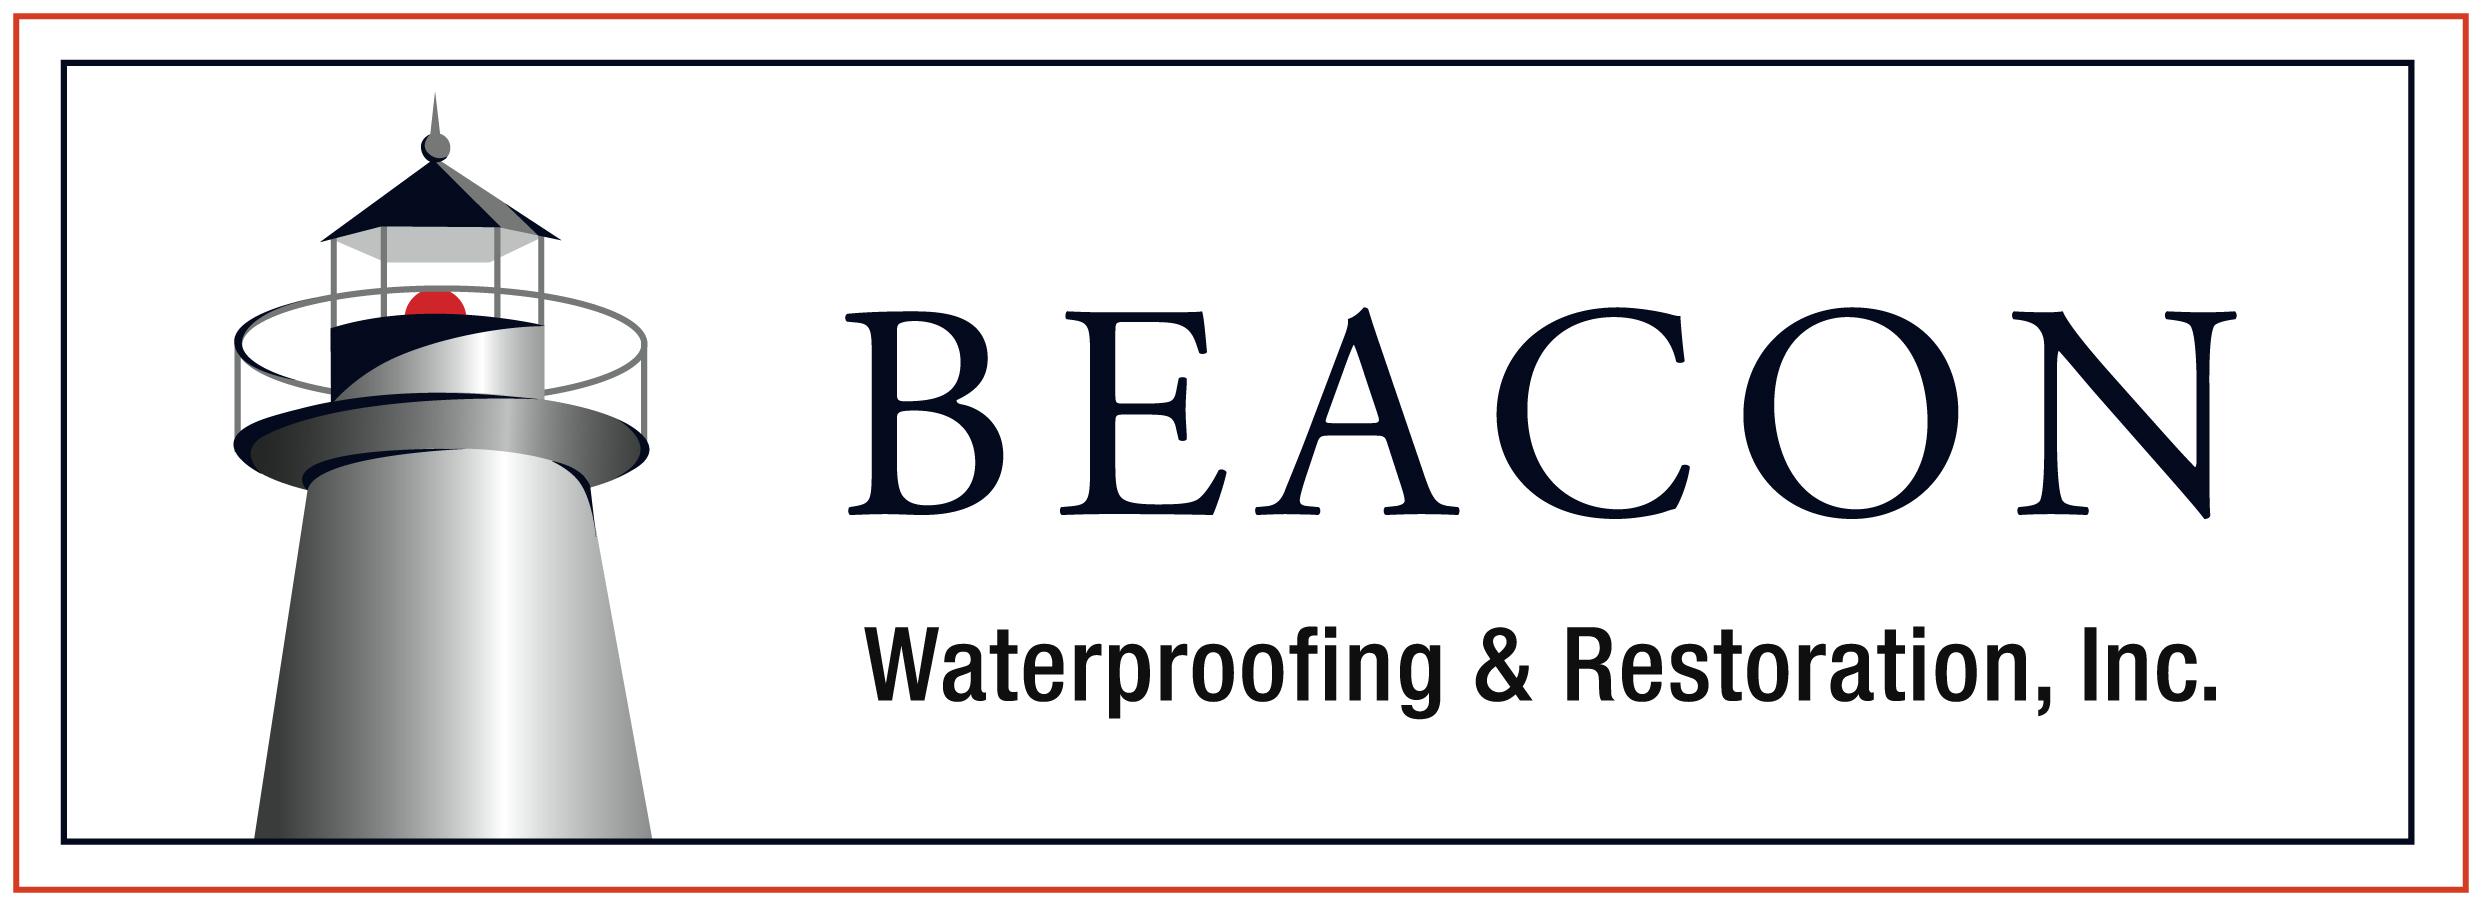 Beacon Waterproofing & Restoration, Inc.